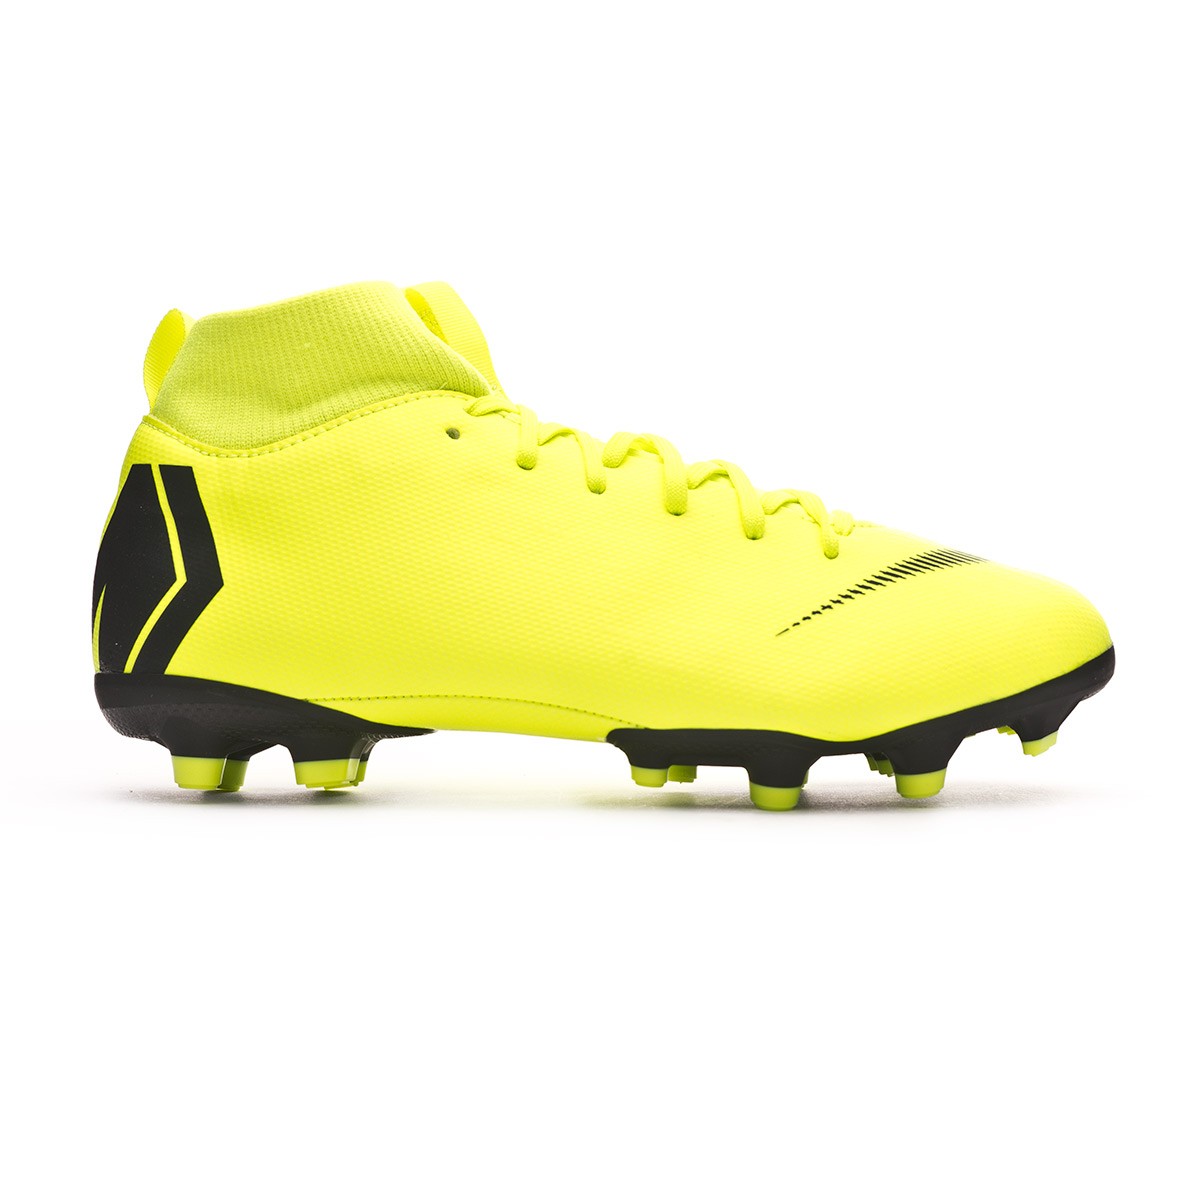 Nike Mercurial Superfly Vi Academy Cr7 Football Shoes.